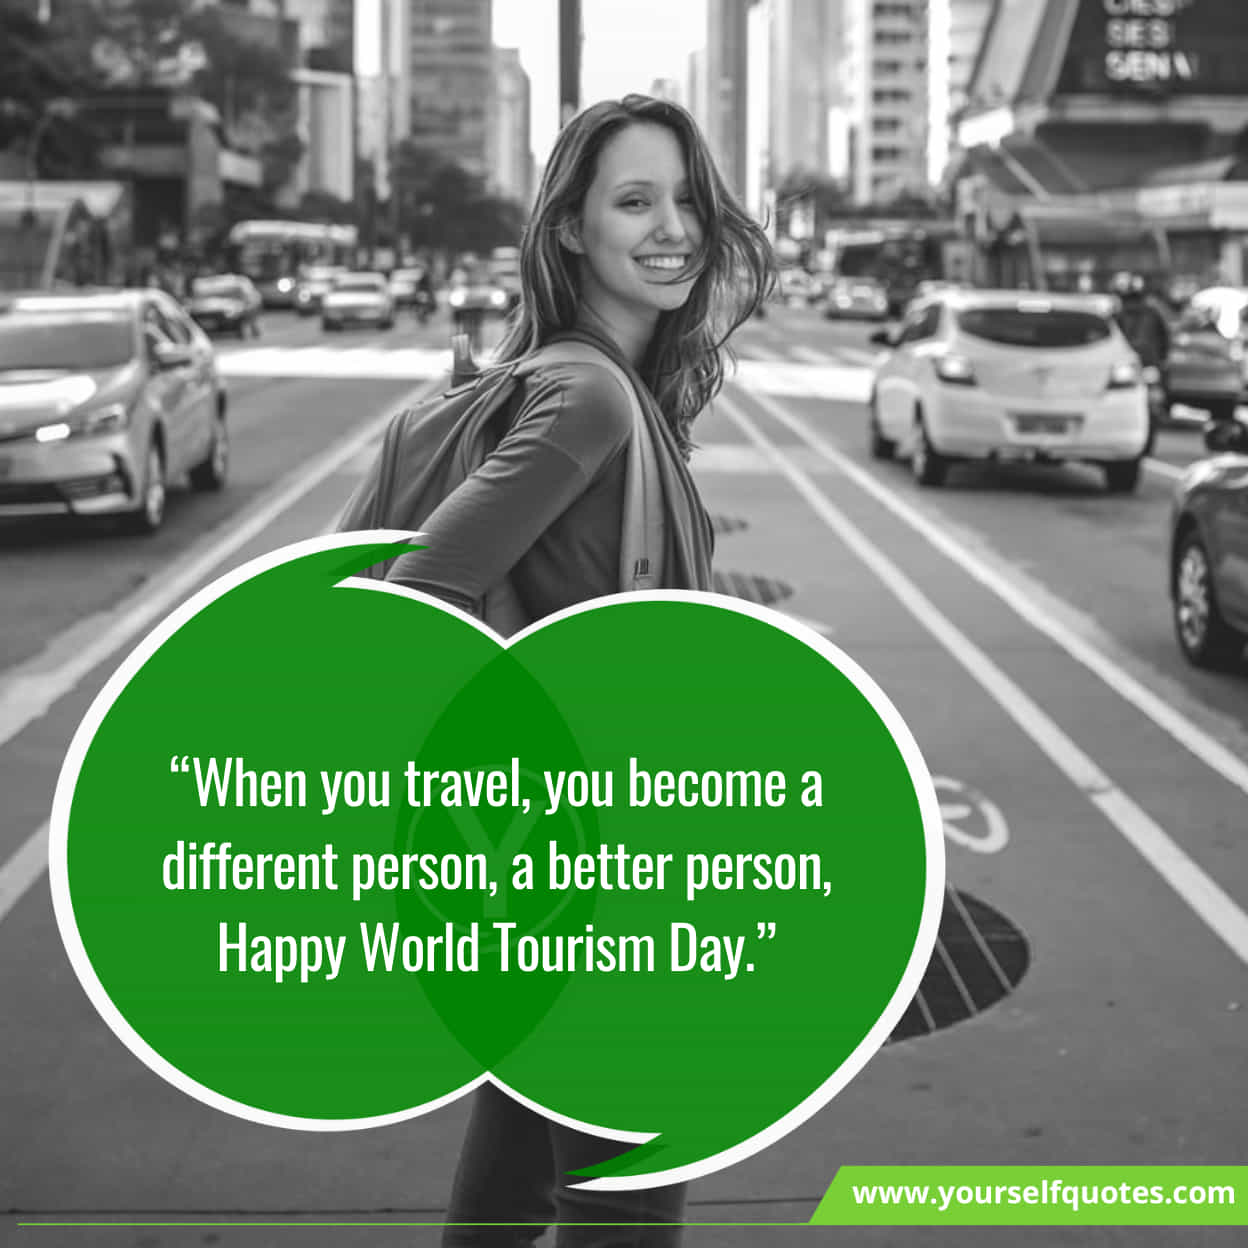 World Tourism Day Sayings & Greetings